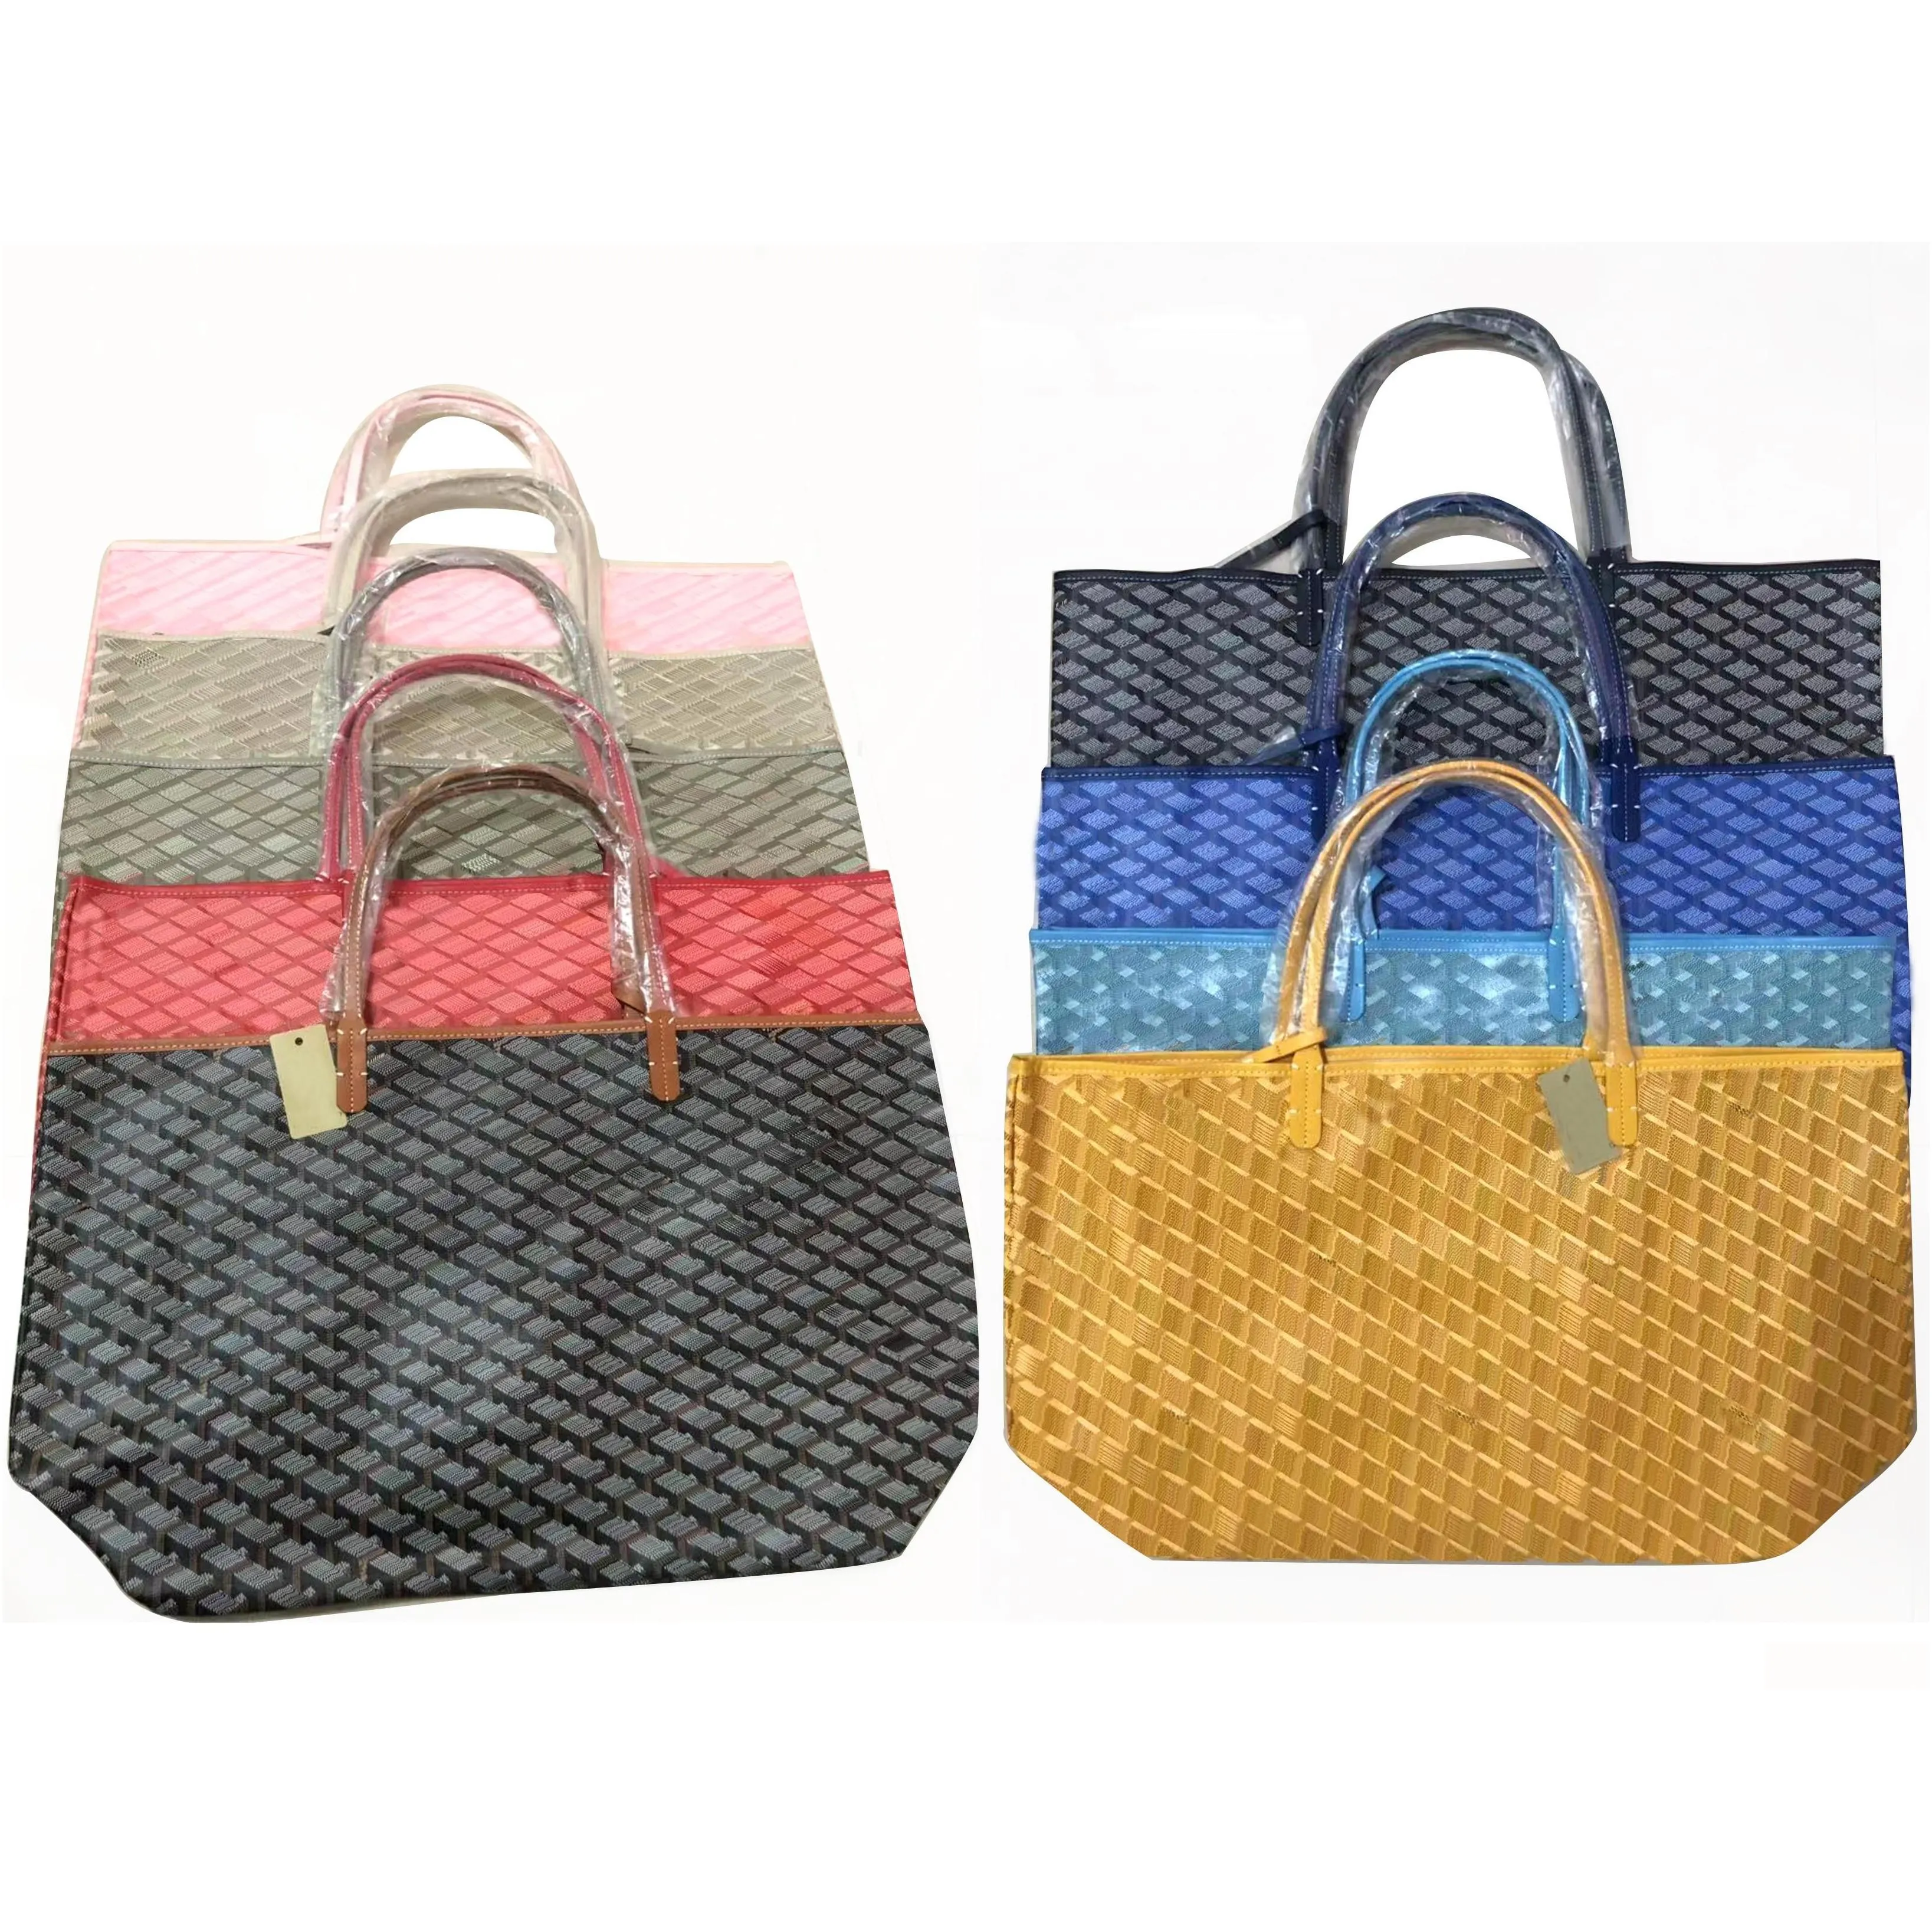 totes womens shopping bags highest quality shoulder bag tote singlesided real handbag f1